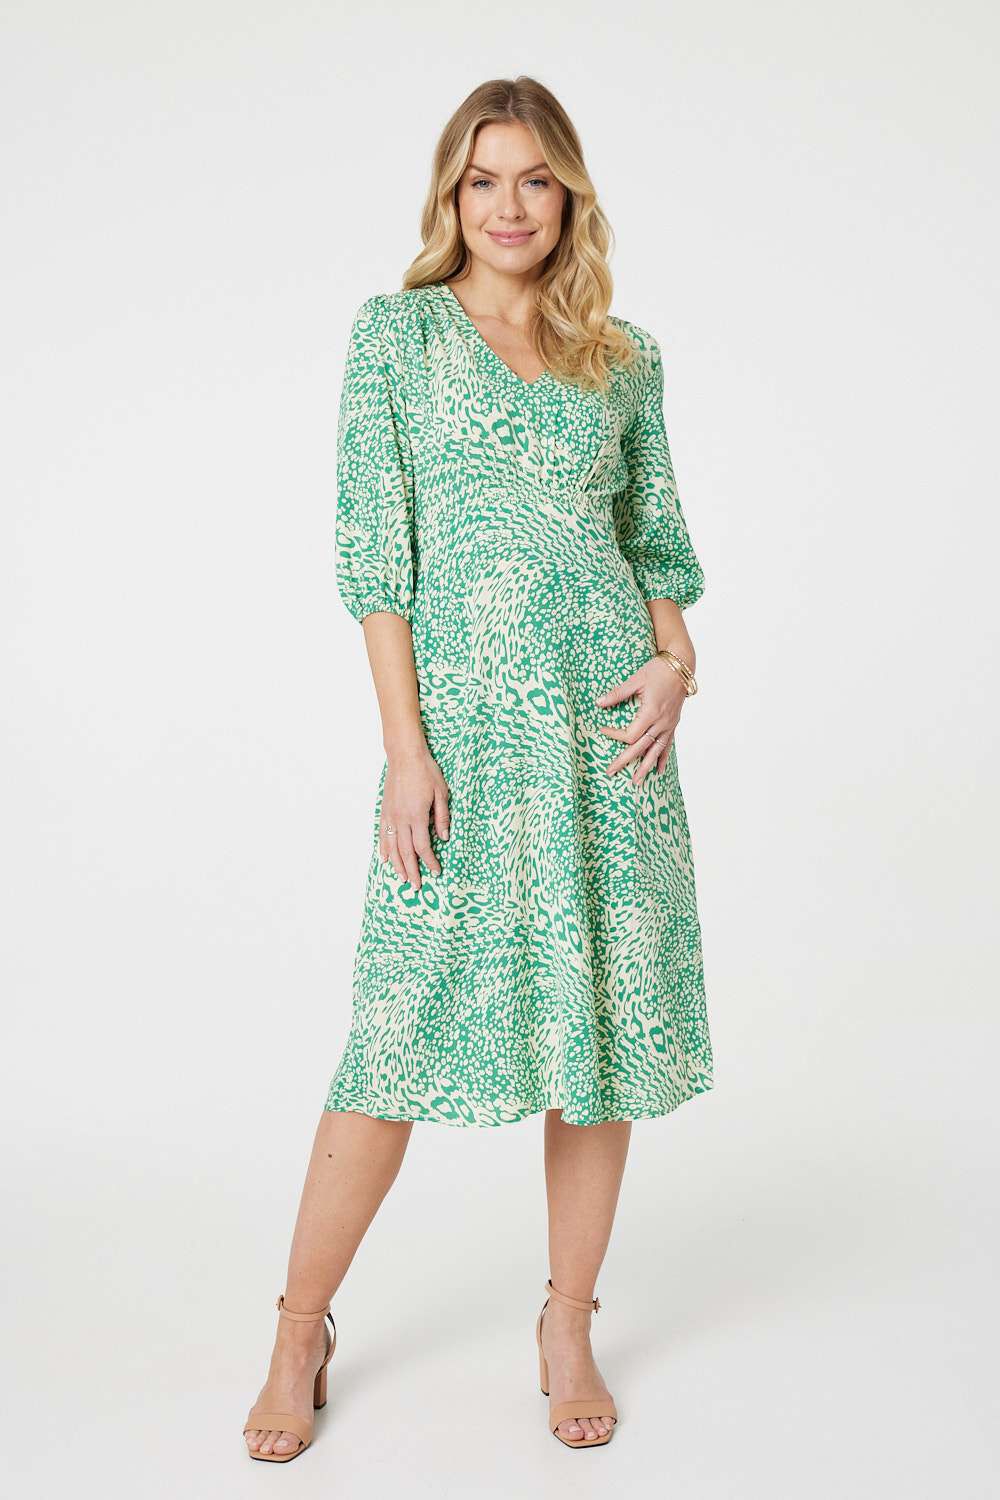 Izabel London Green - Animal Print Slim Fit Midi Dress, Size: 18